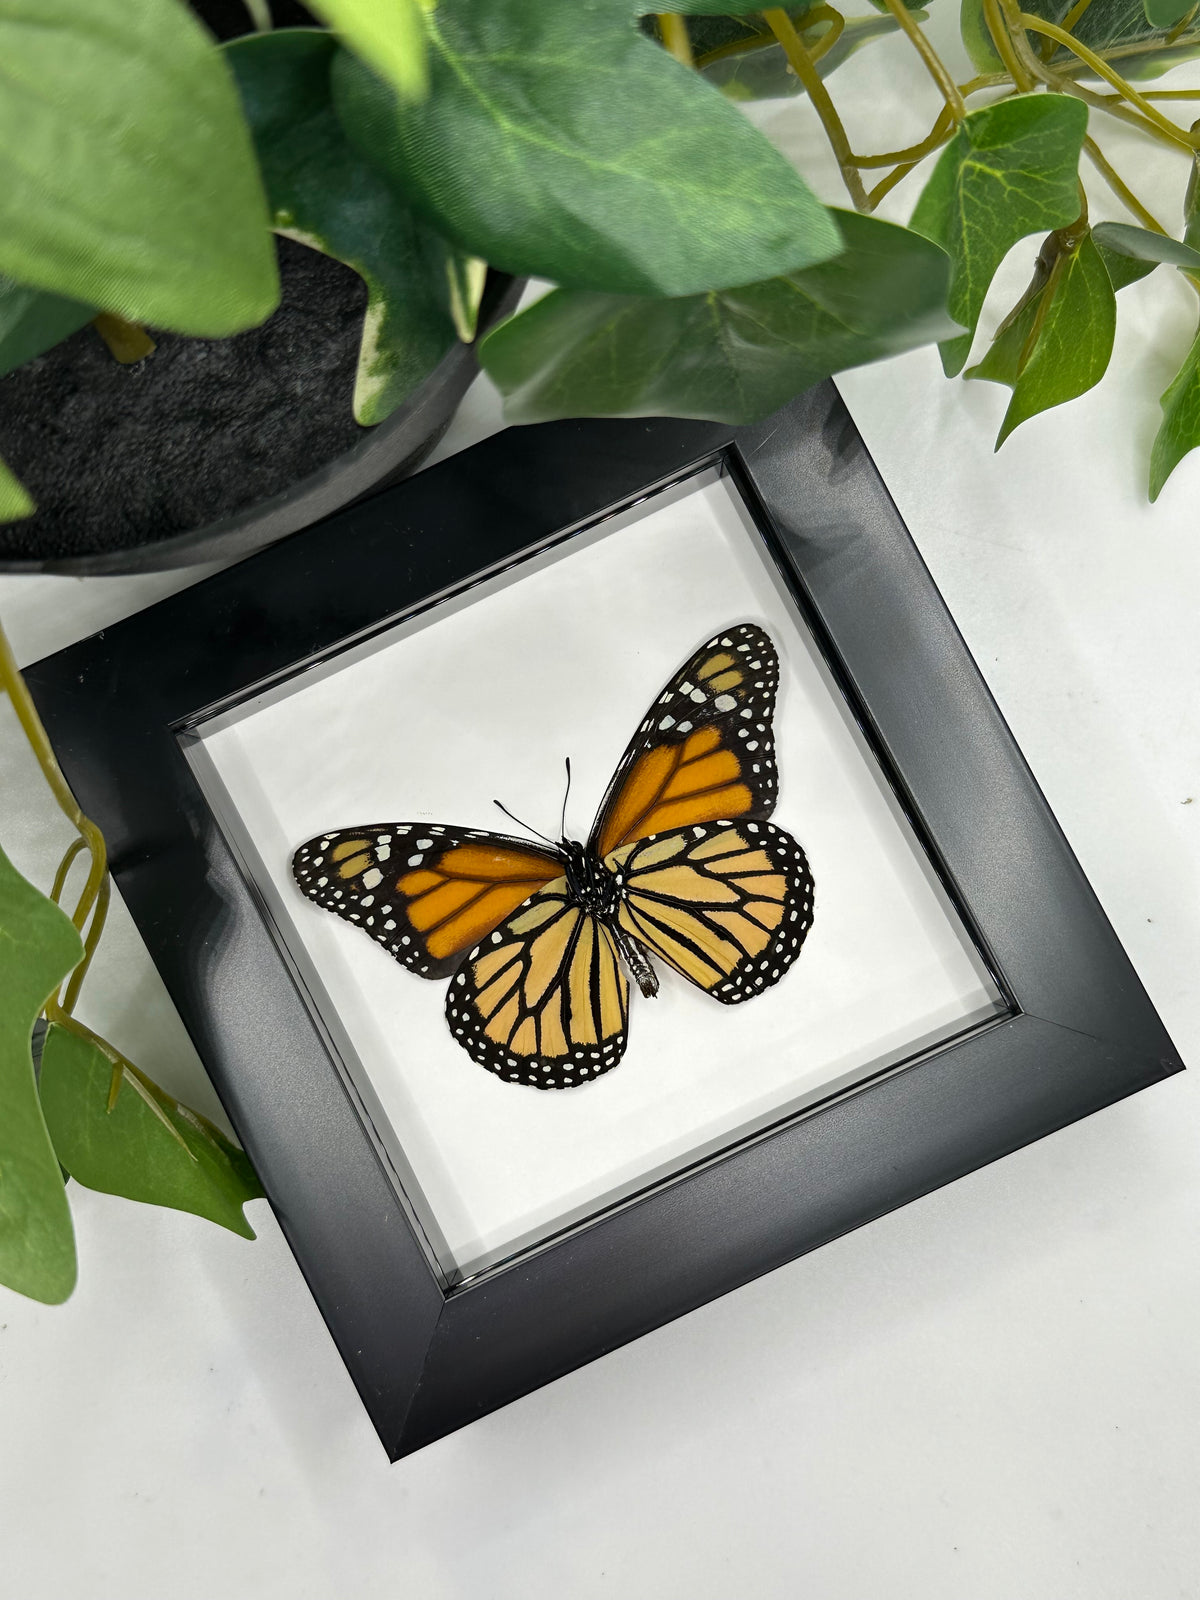 Monarch Butterfly / Danaus Plexippus in a frame